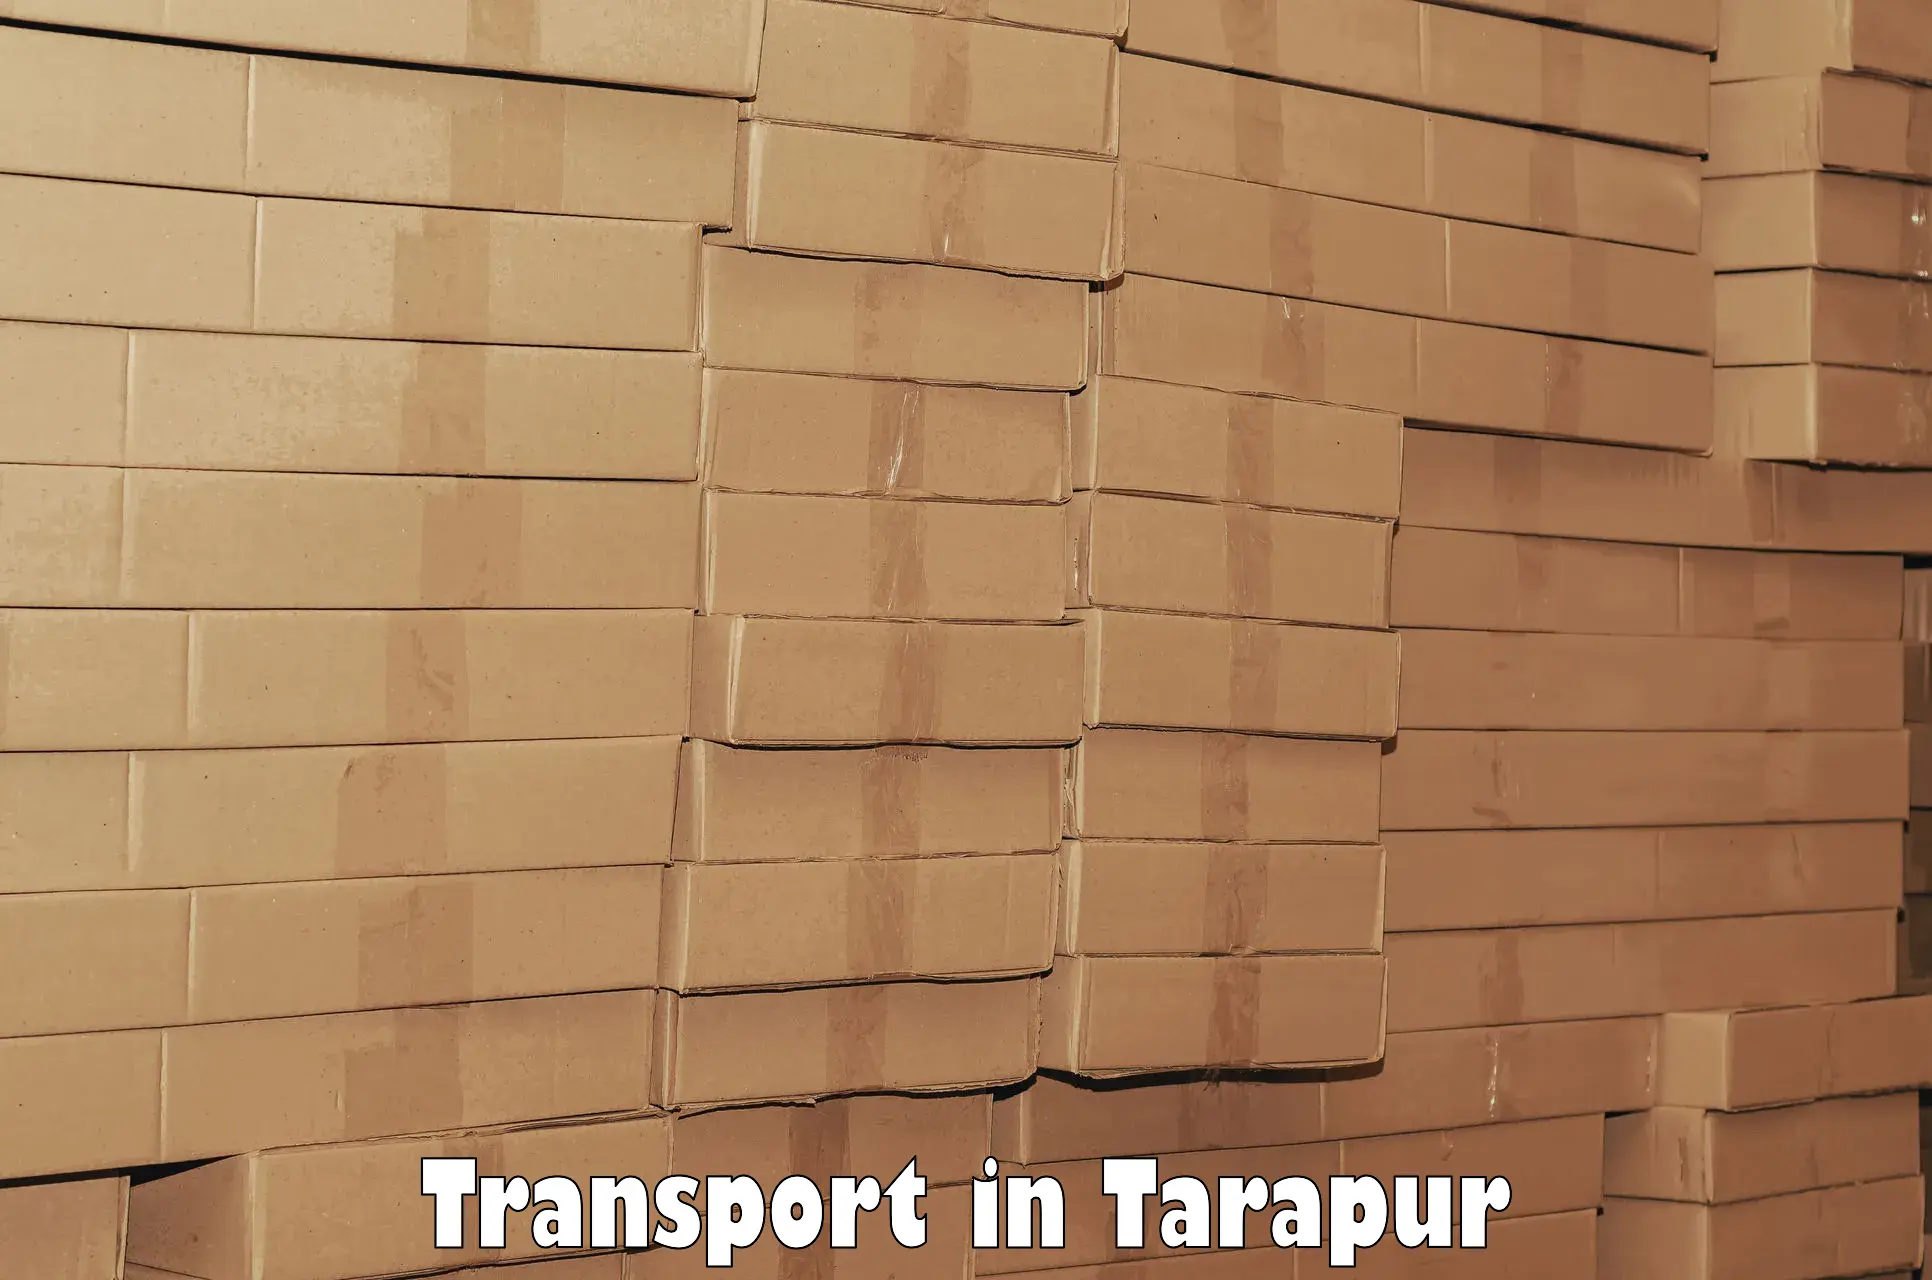 Vehicle transport services in Tarapur